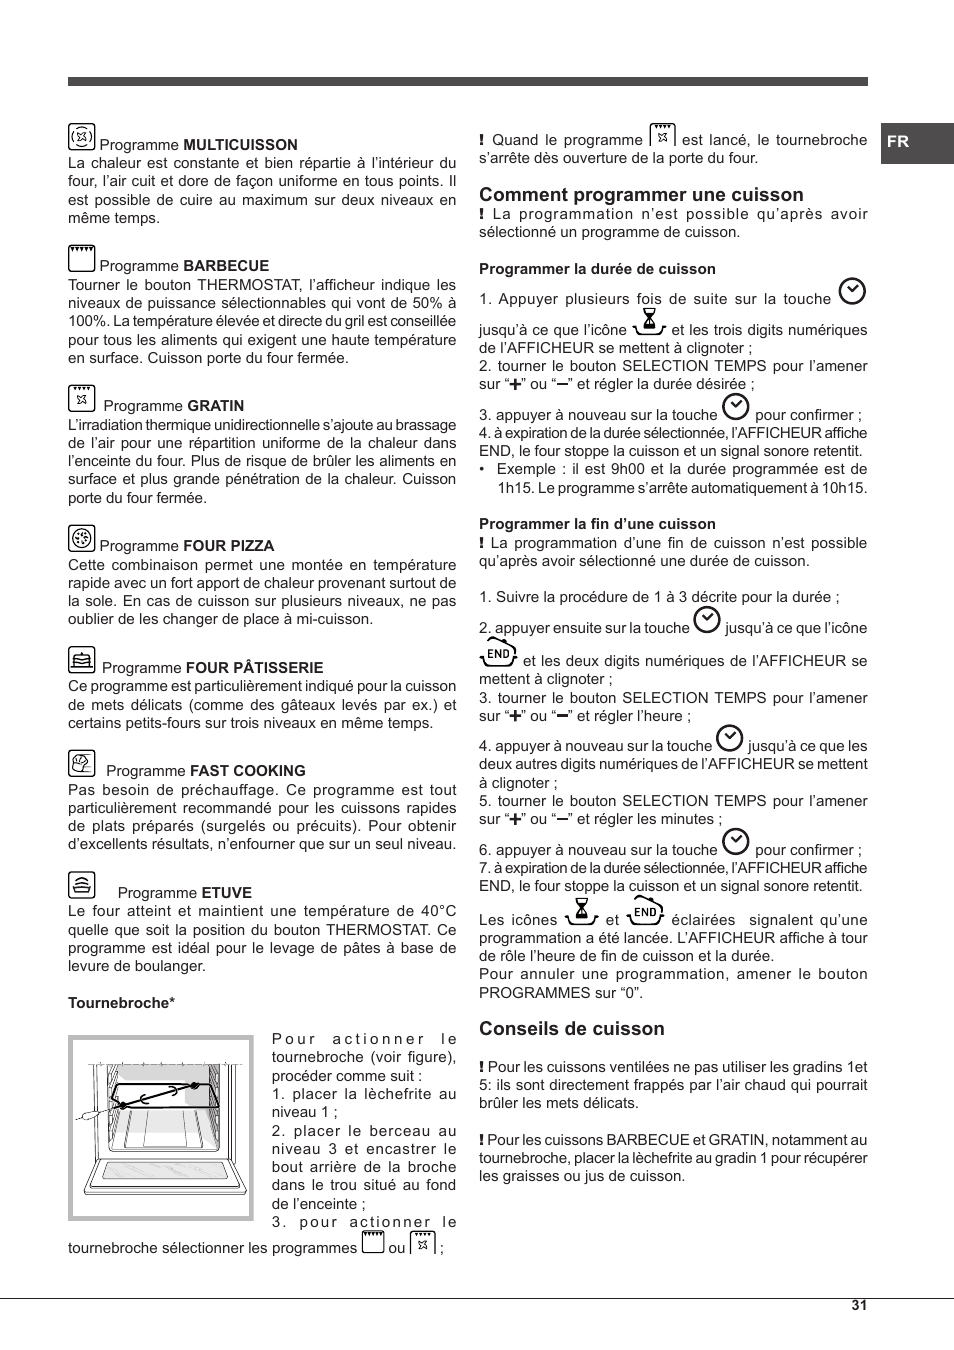 Comment programmer une cuisson, Conseils de cuisson | Hotpoint Ariston  Style FH 89 P IX-HA S User Manual | Page 31 / 56